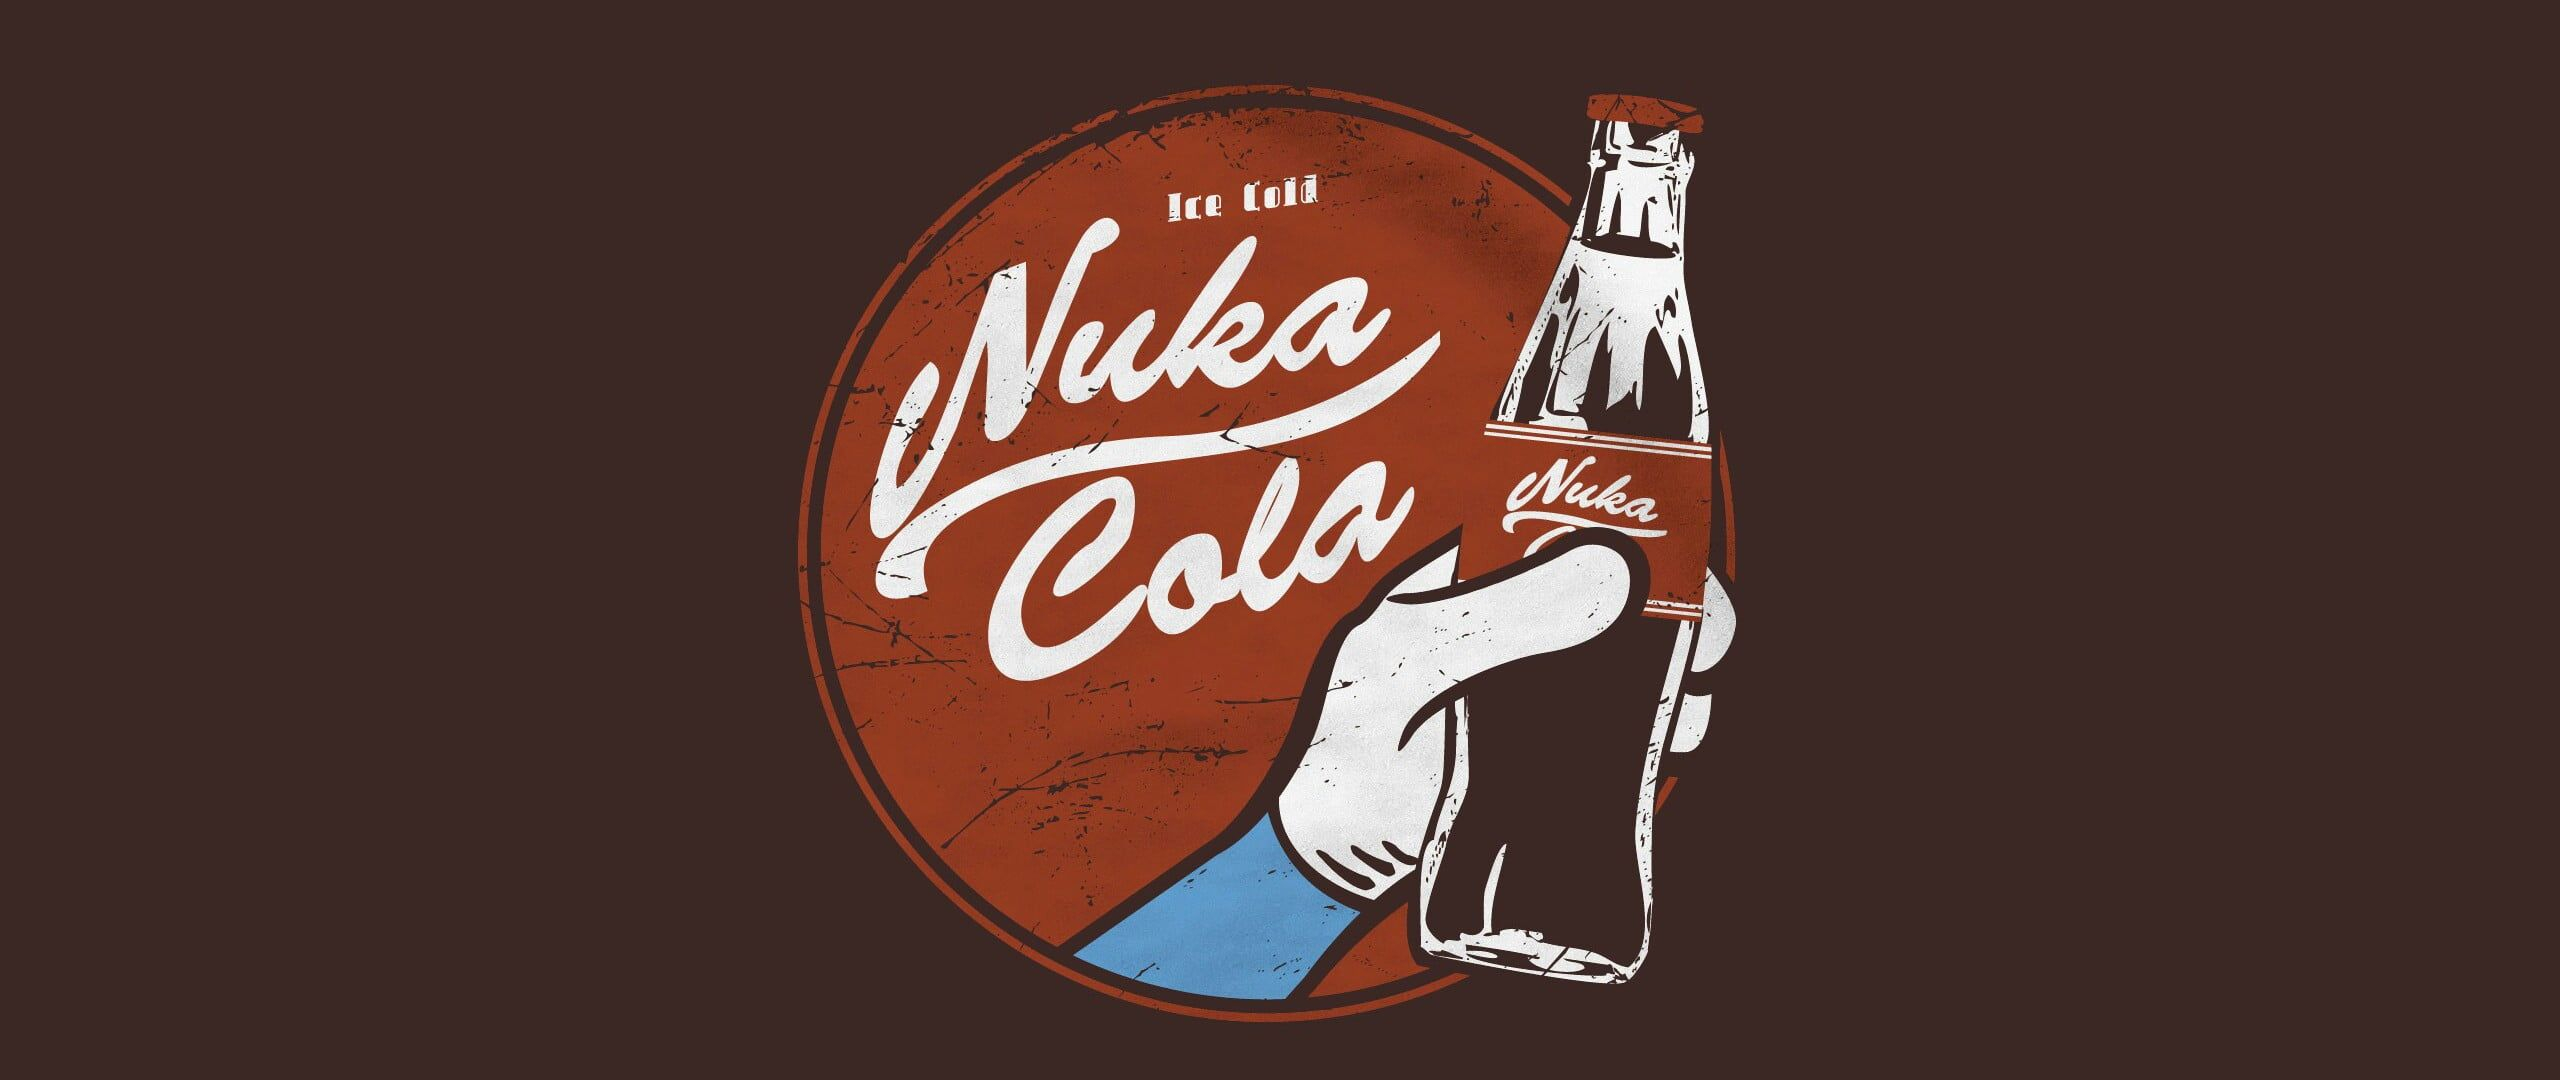 2560x1080 Nuka Cola illustration Nuka Cola Fallout 4 video games #2K #wallpaper #hdwallpaper #desktop | Star wars background, Latest hd wallpapers, Wolf illustrati